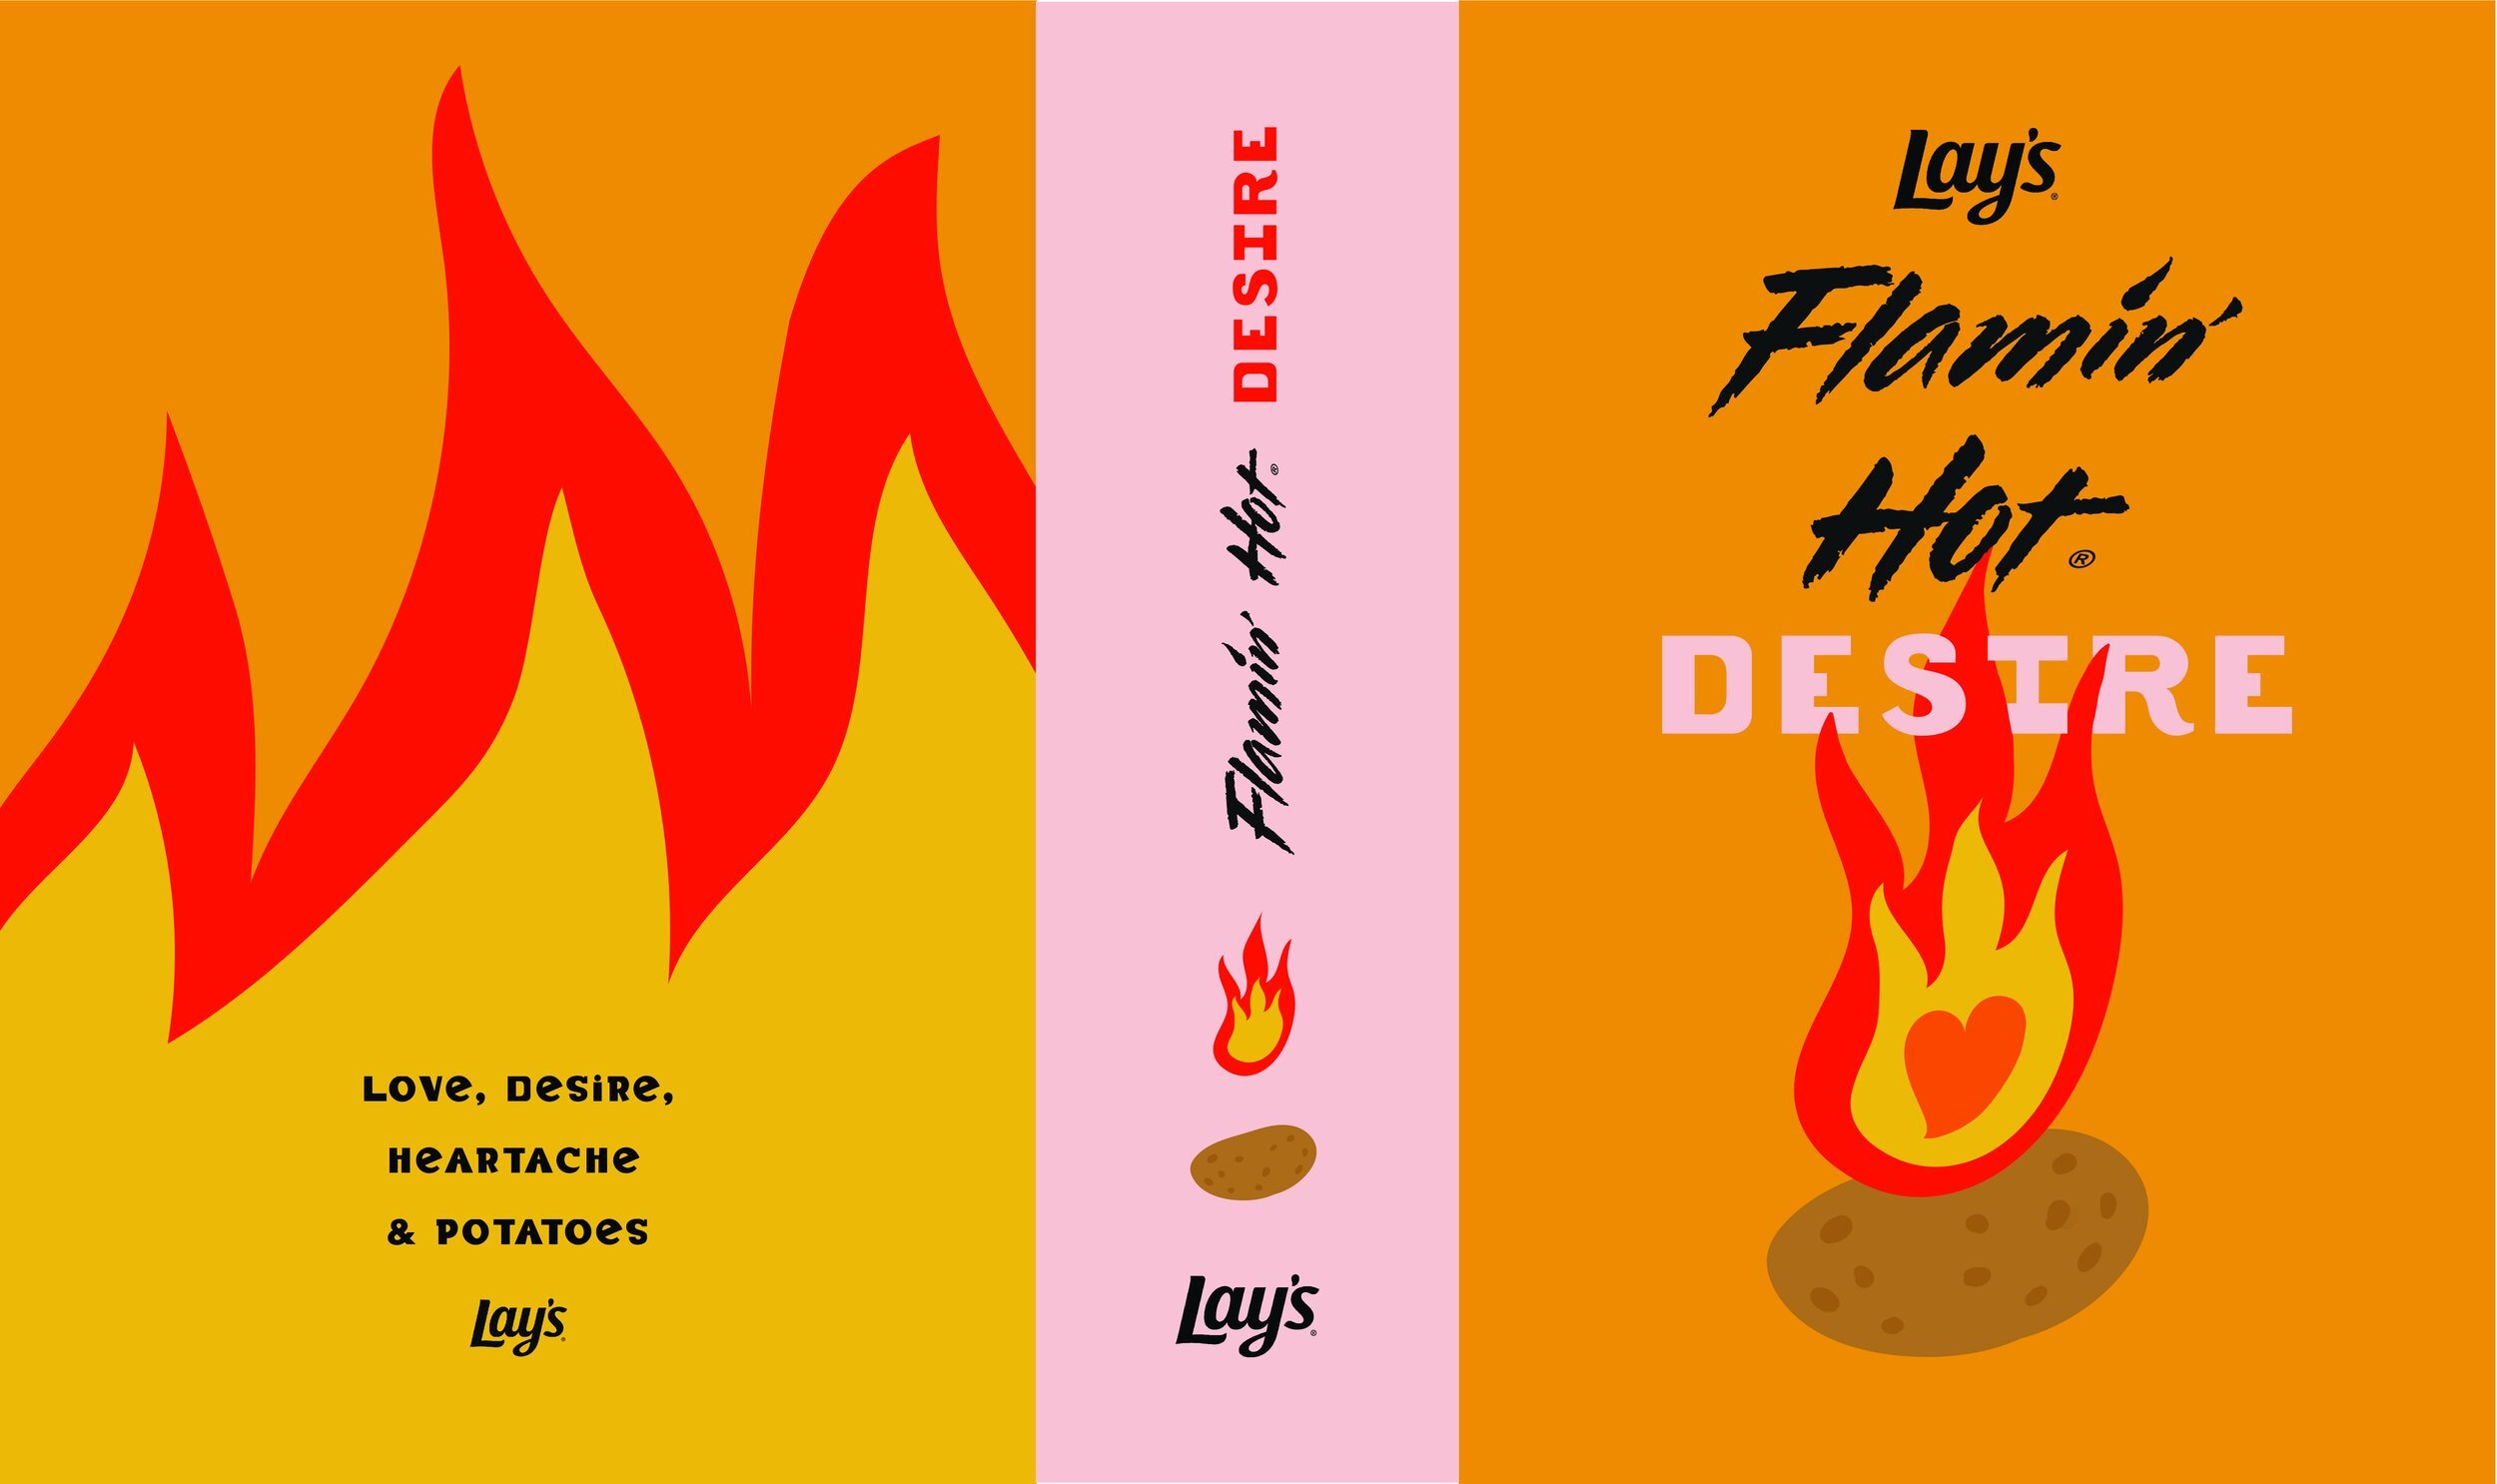 Flamin+hot+desire.jpg